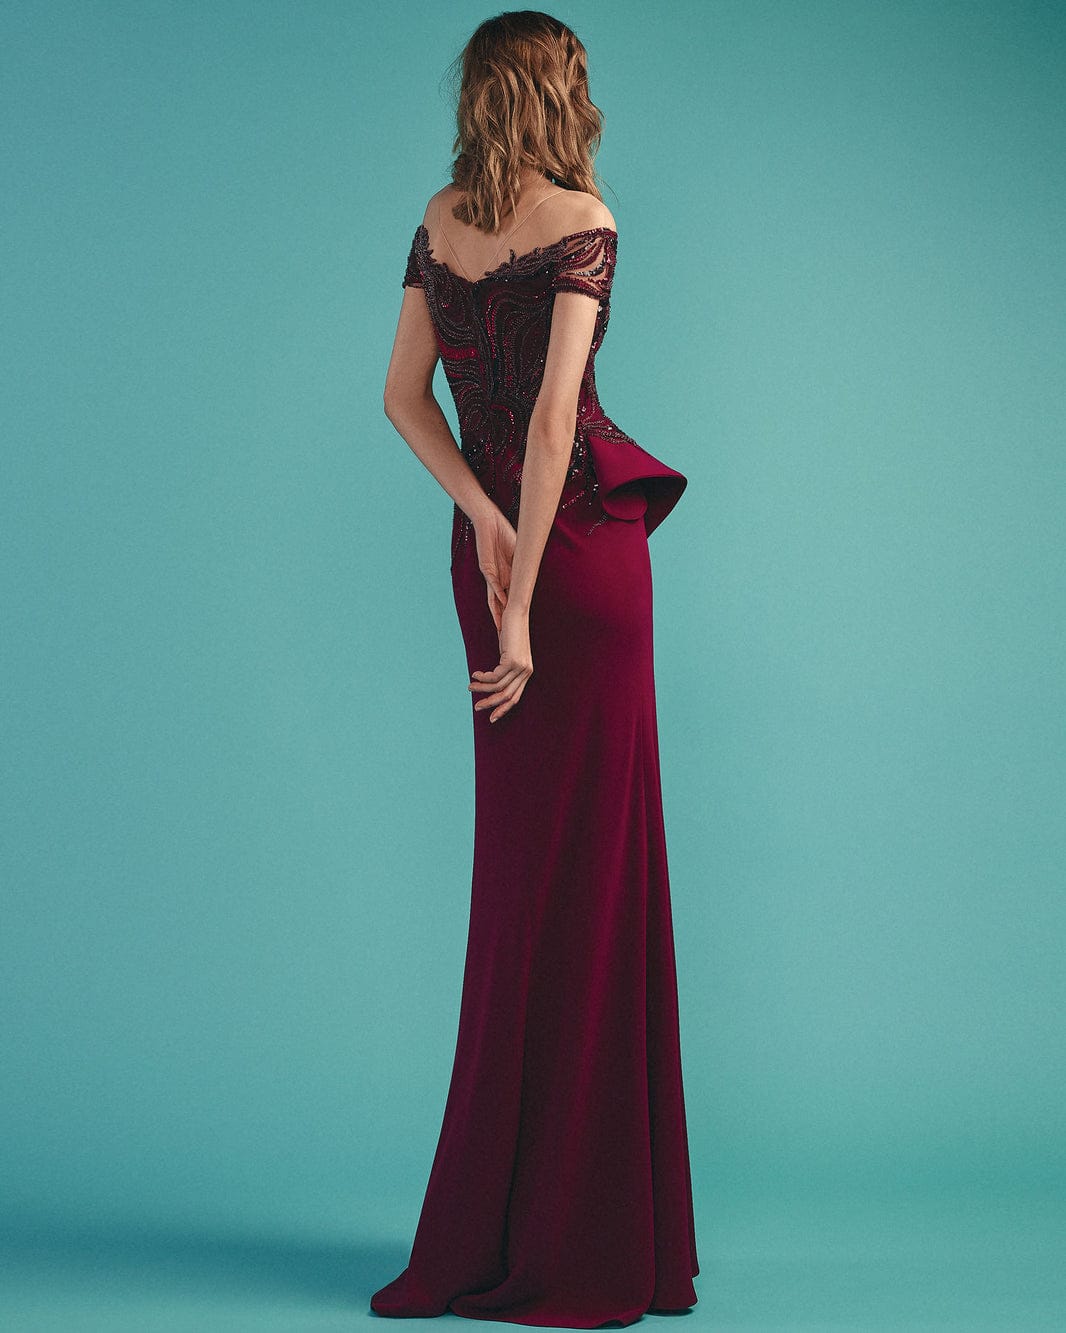 Gemy-Maalouf-BC1516-Embellished-Long-Dress-Purple-Glamorous-Off-Shoulder-Elegance-Back-View - Rofial Beauty